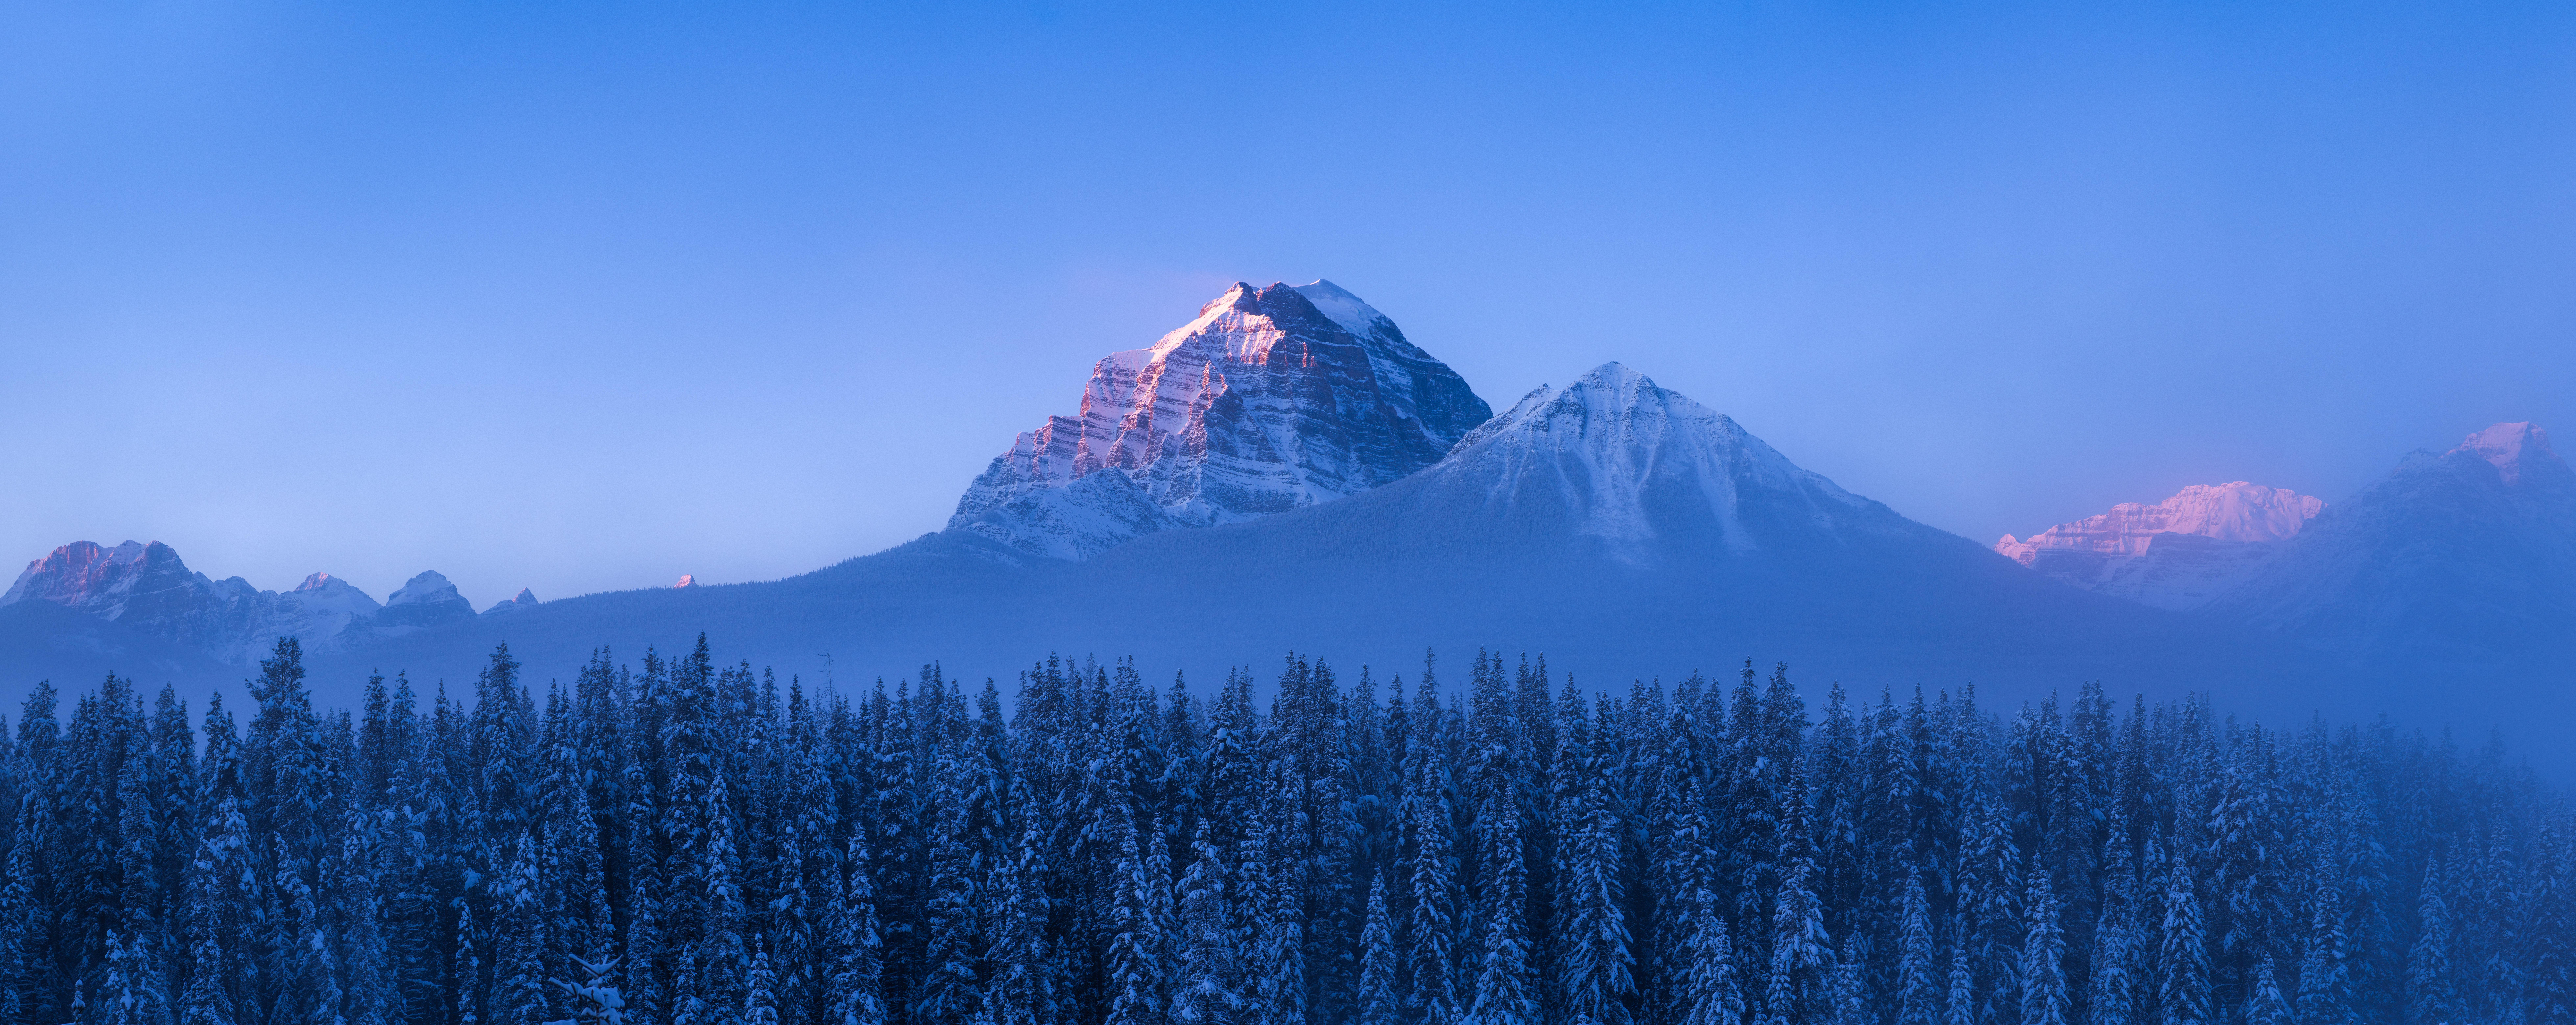 General 15673x6238 winter snow mist mountains forest sunset Alberta Canada nature landscape Color Burst